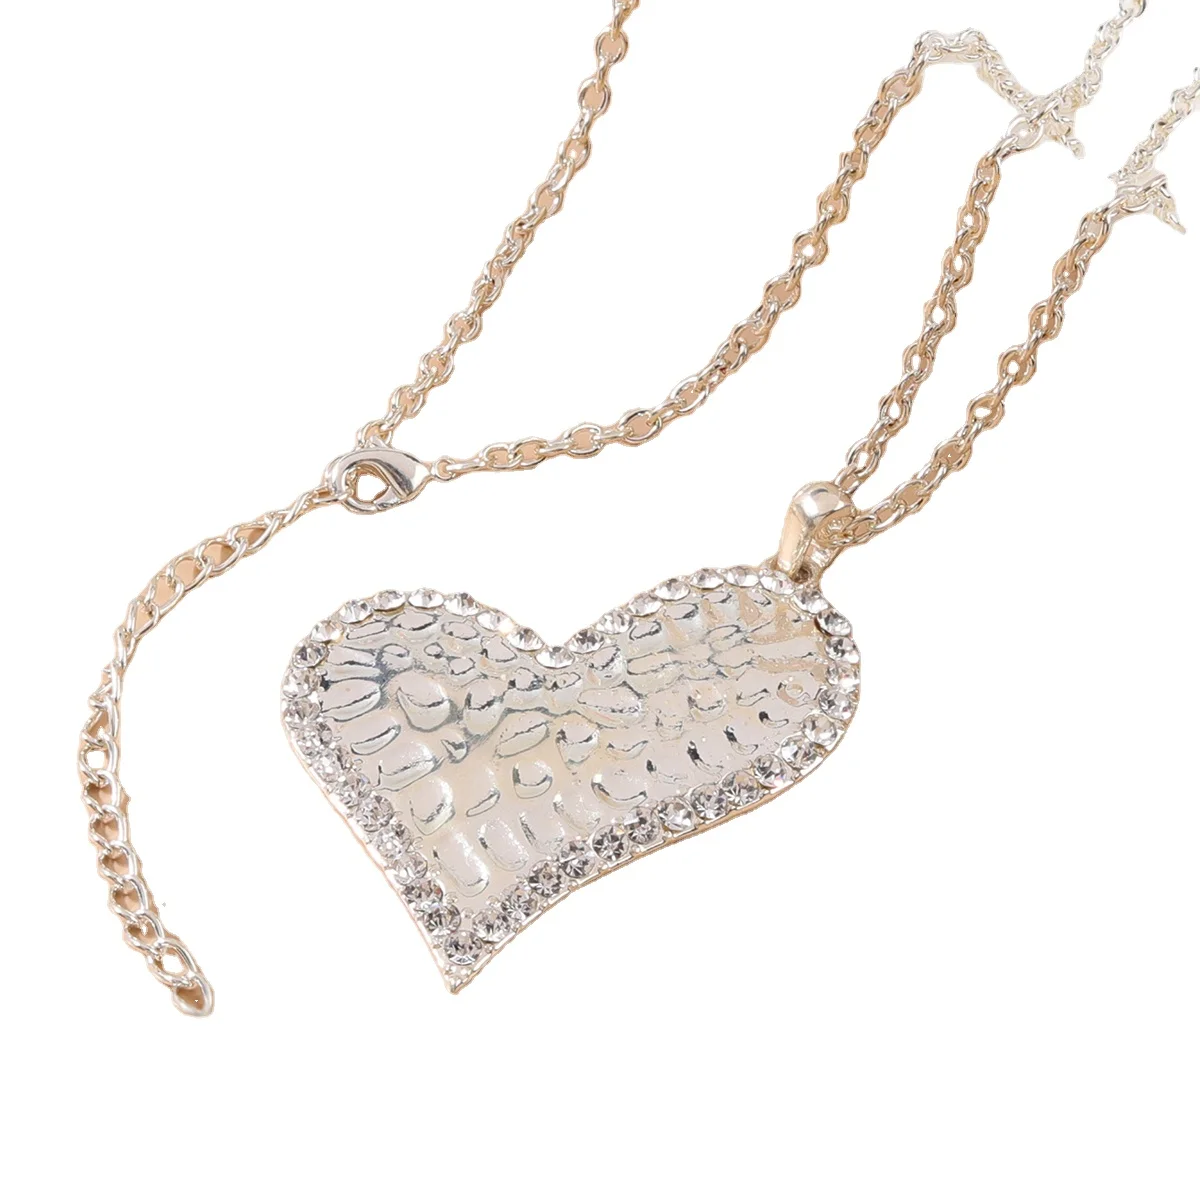 

Obei hot sale women jewelry silver plating long chain big pendant girls party dainty gift sideways heart necklace